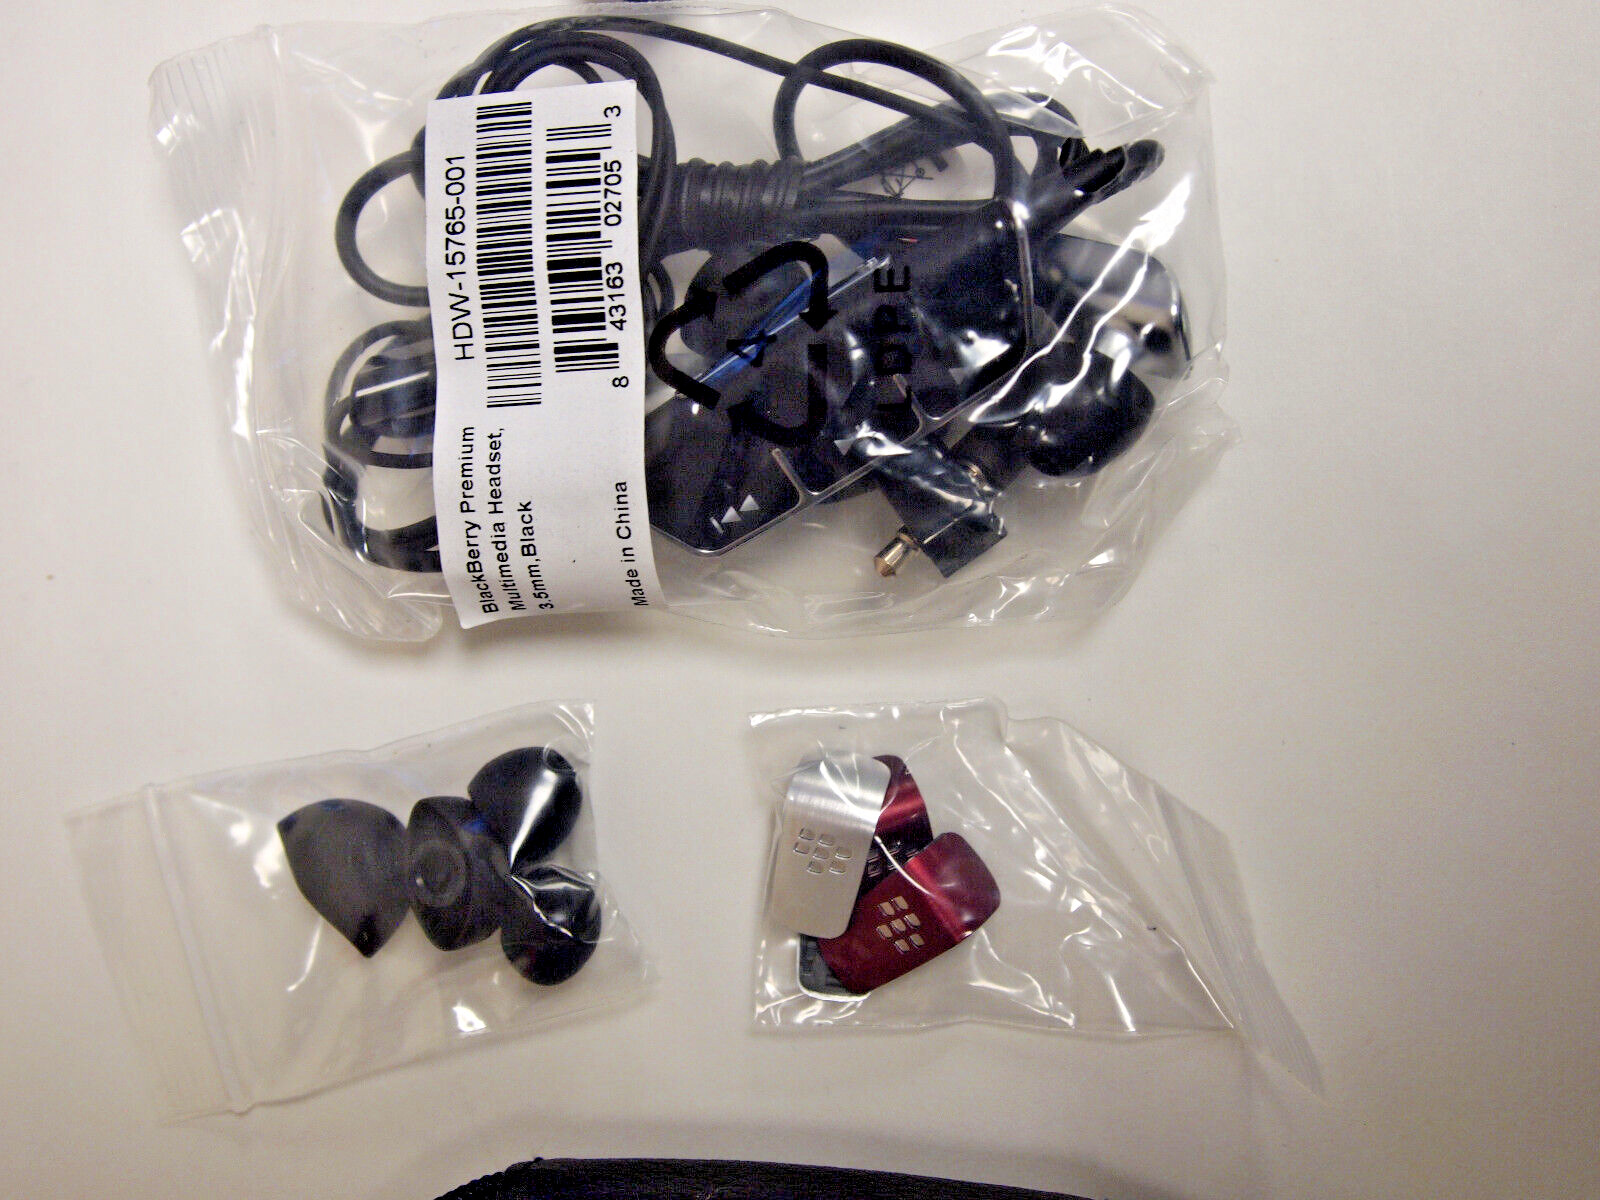 NEW Blackberry Premium Multimedia 3.5mm Headset Case HD Stereo HDW-15765-001